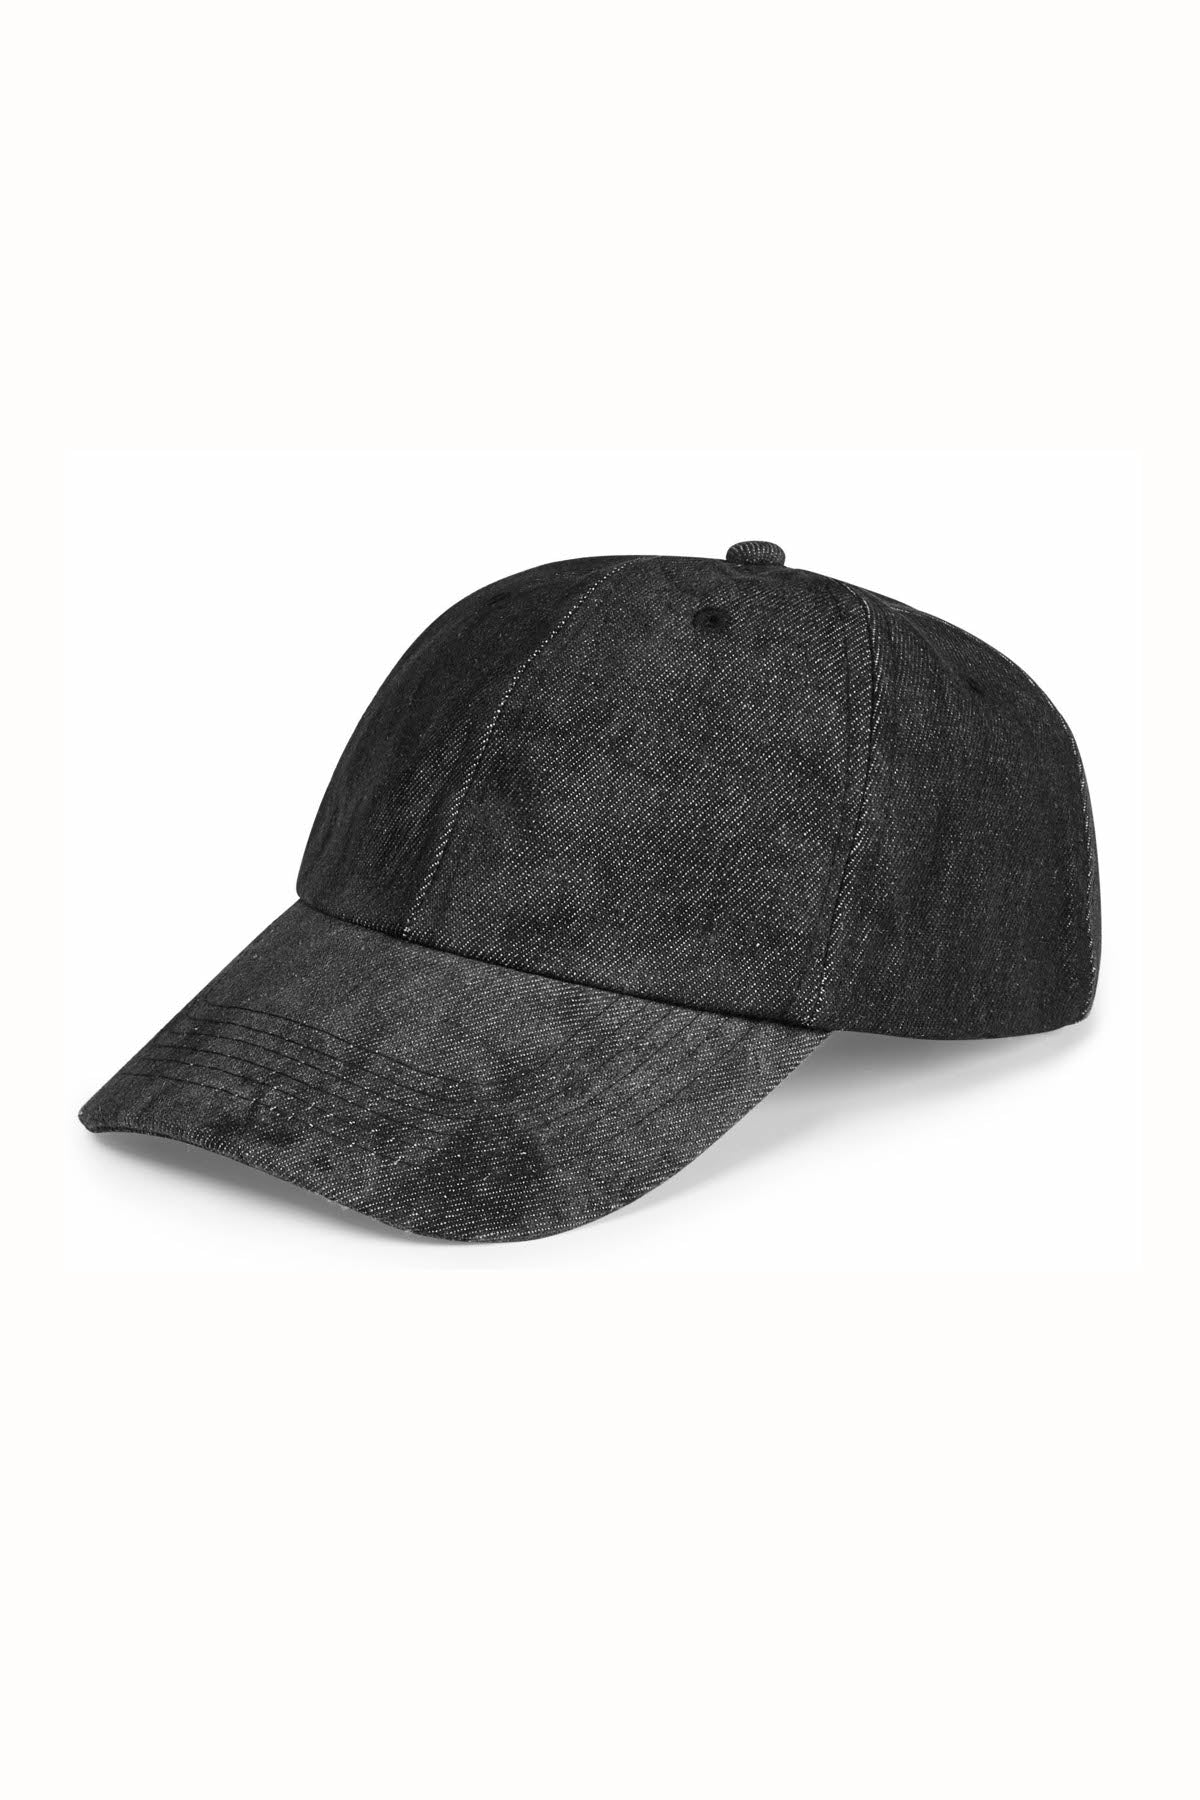 TwelveNYC Dark-Grey Denim Baseball Cap